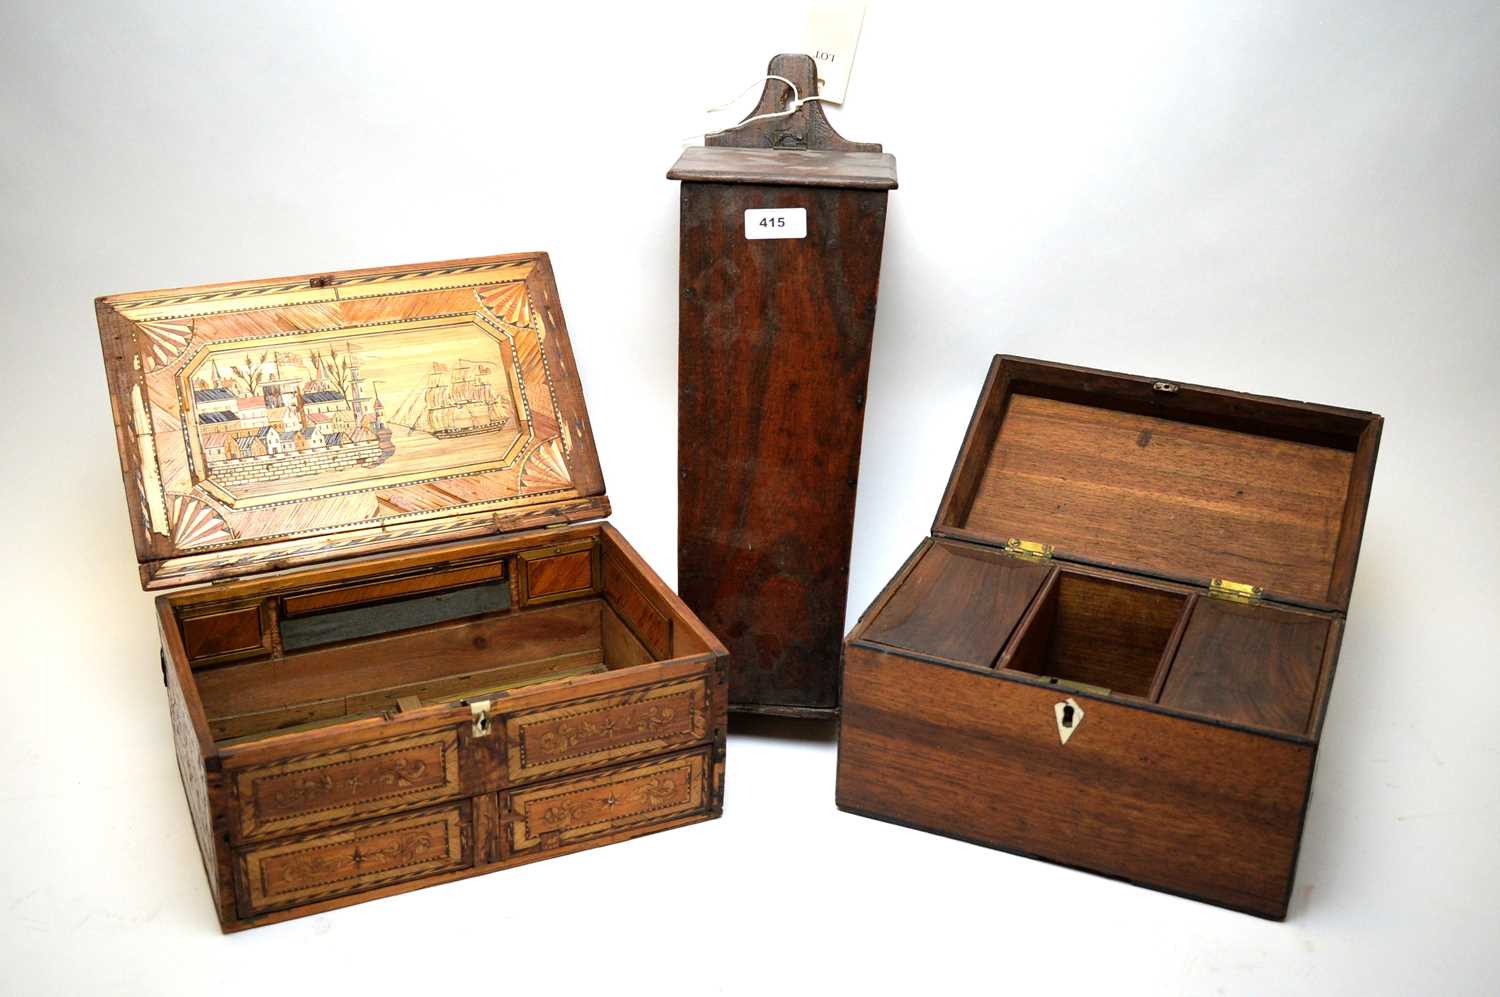 Lot 415 - Napoleonic Prisoner of War work box; candle box; and tea caddy.